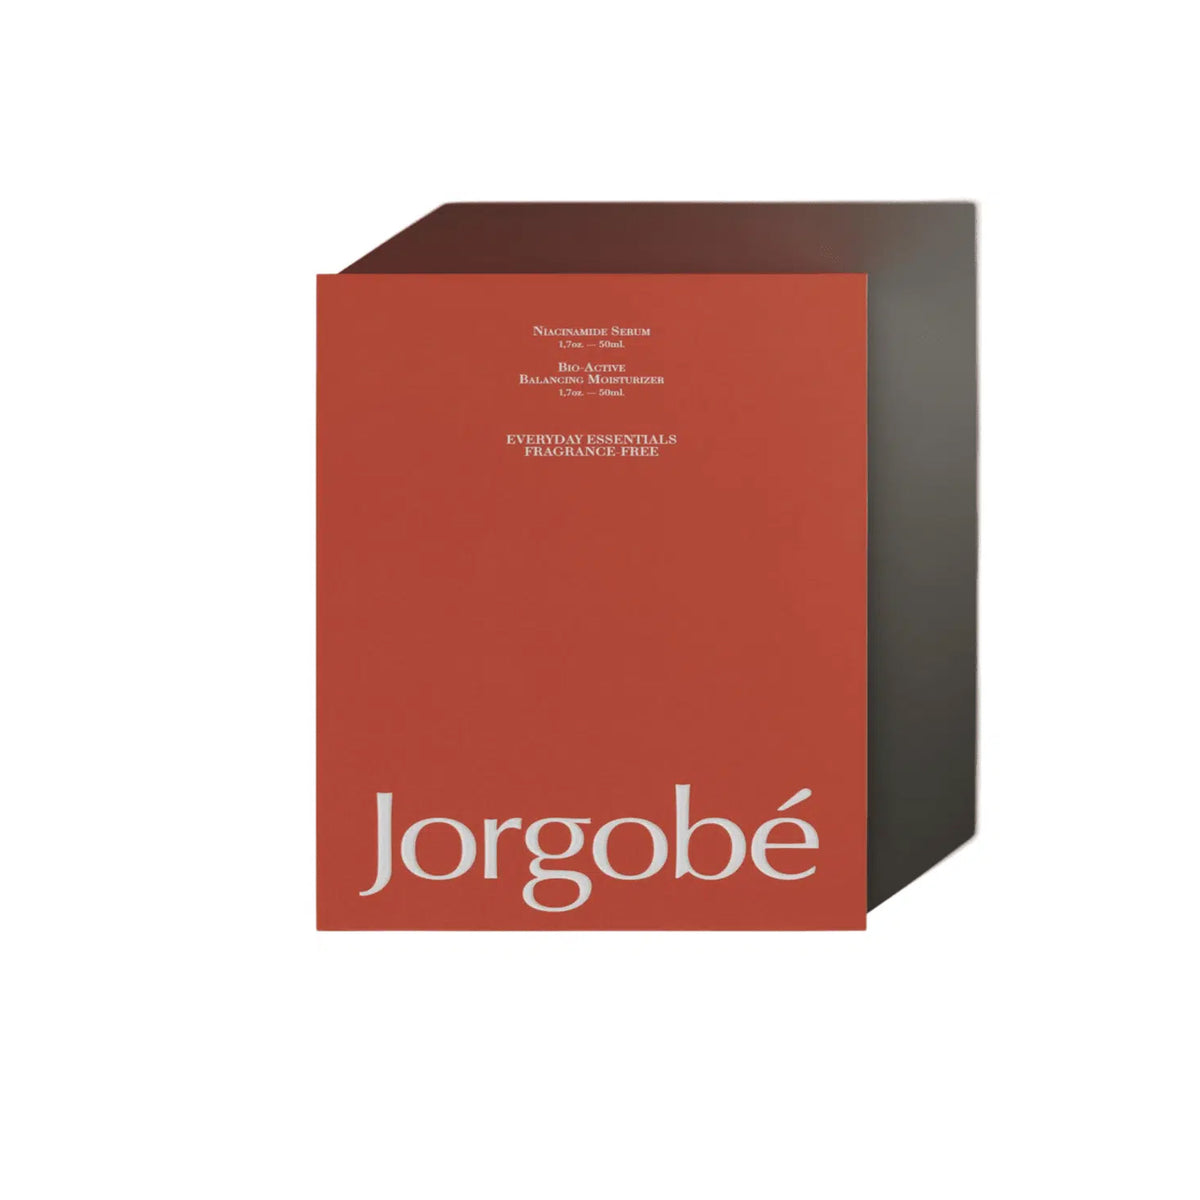 Jorgobe Everyday Essentials Fragrance Free Gift Set